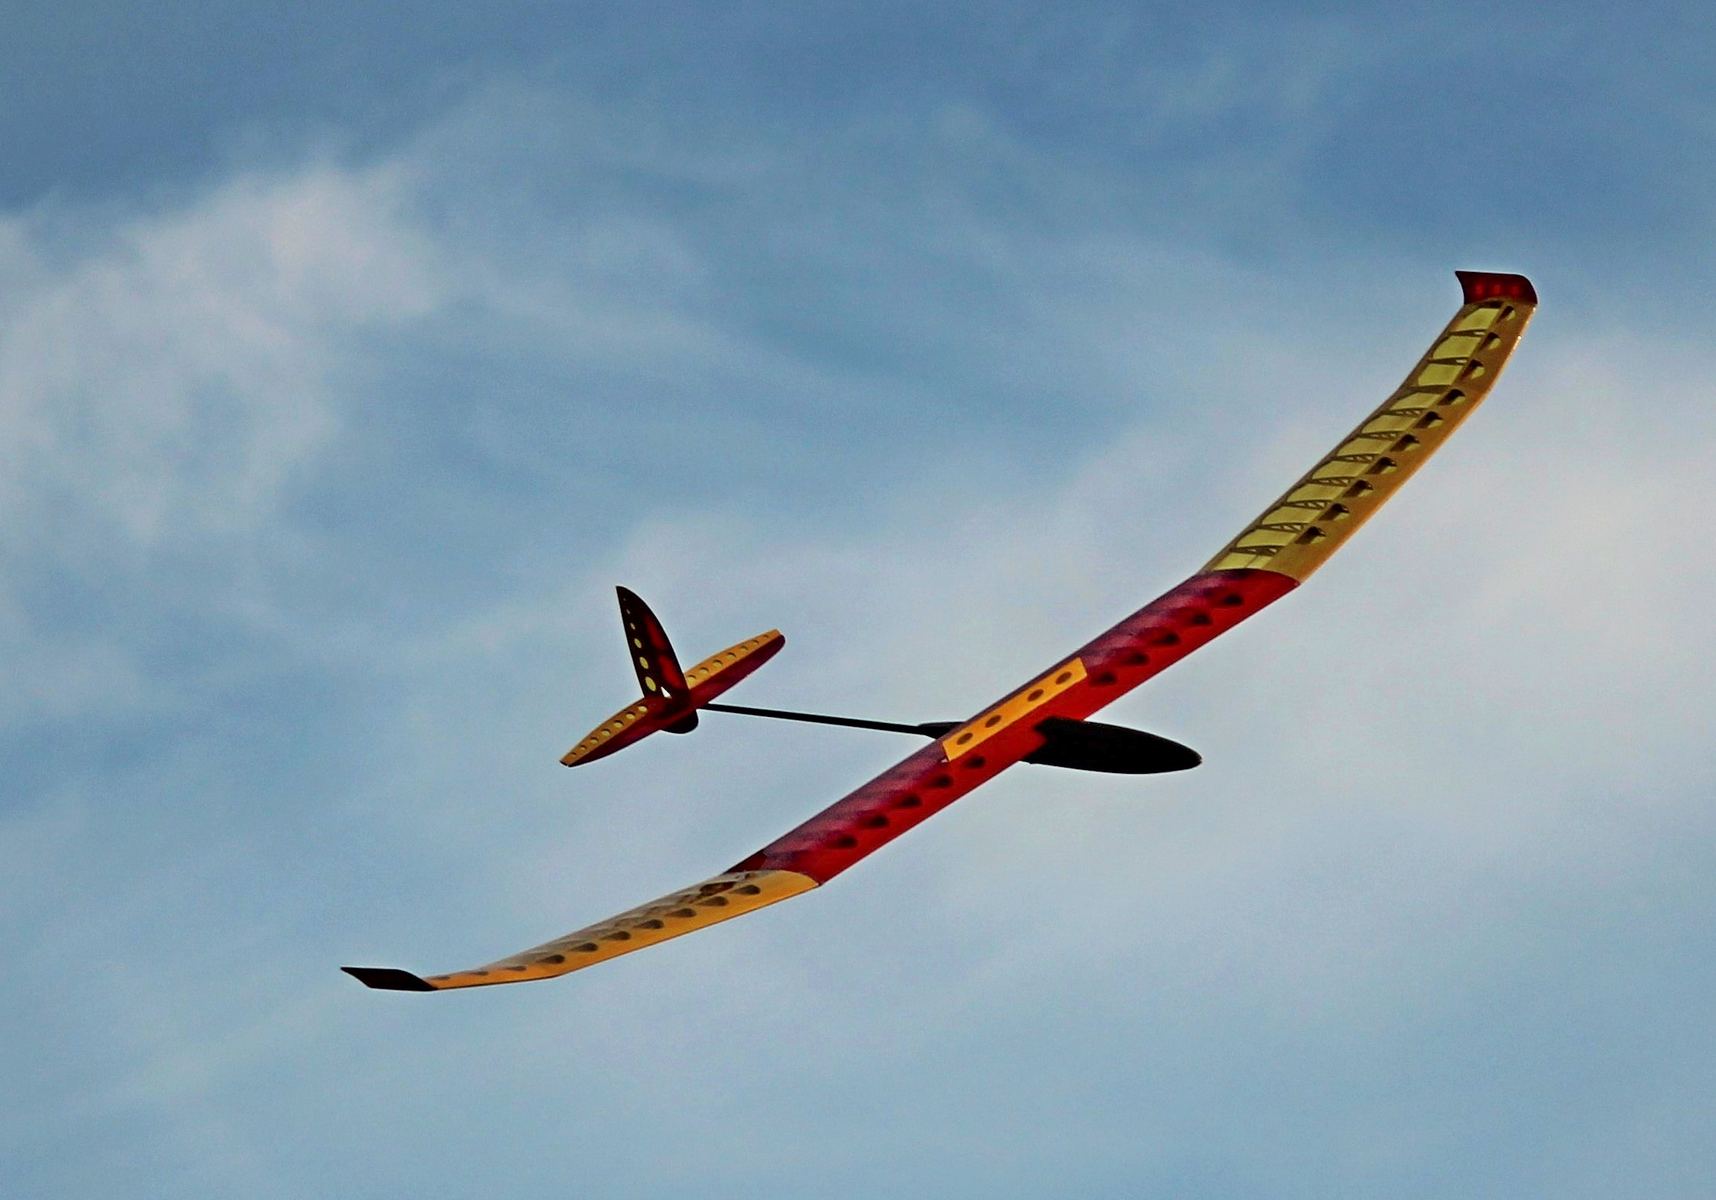 RC Glider  D-Box 2m wing span Raptor Advance Aerobatic Thermal sailplane 